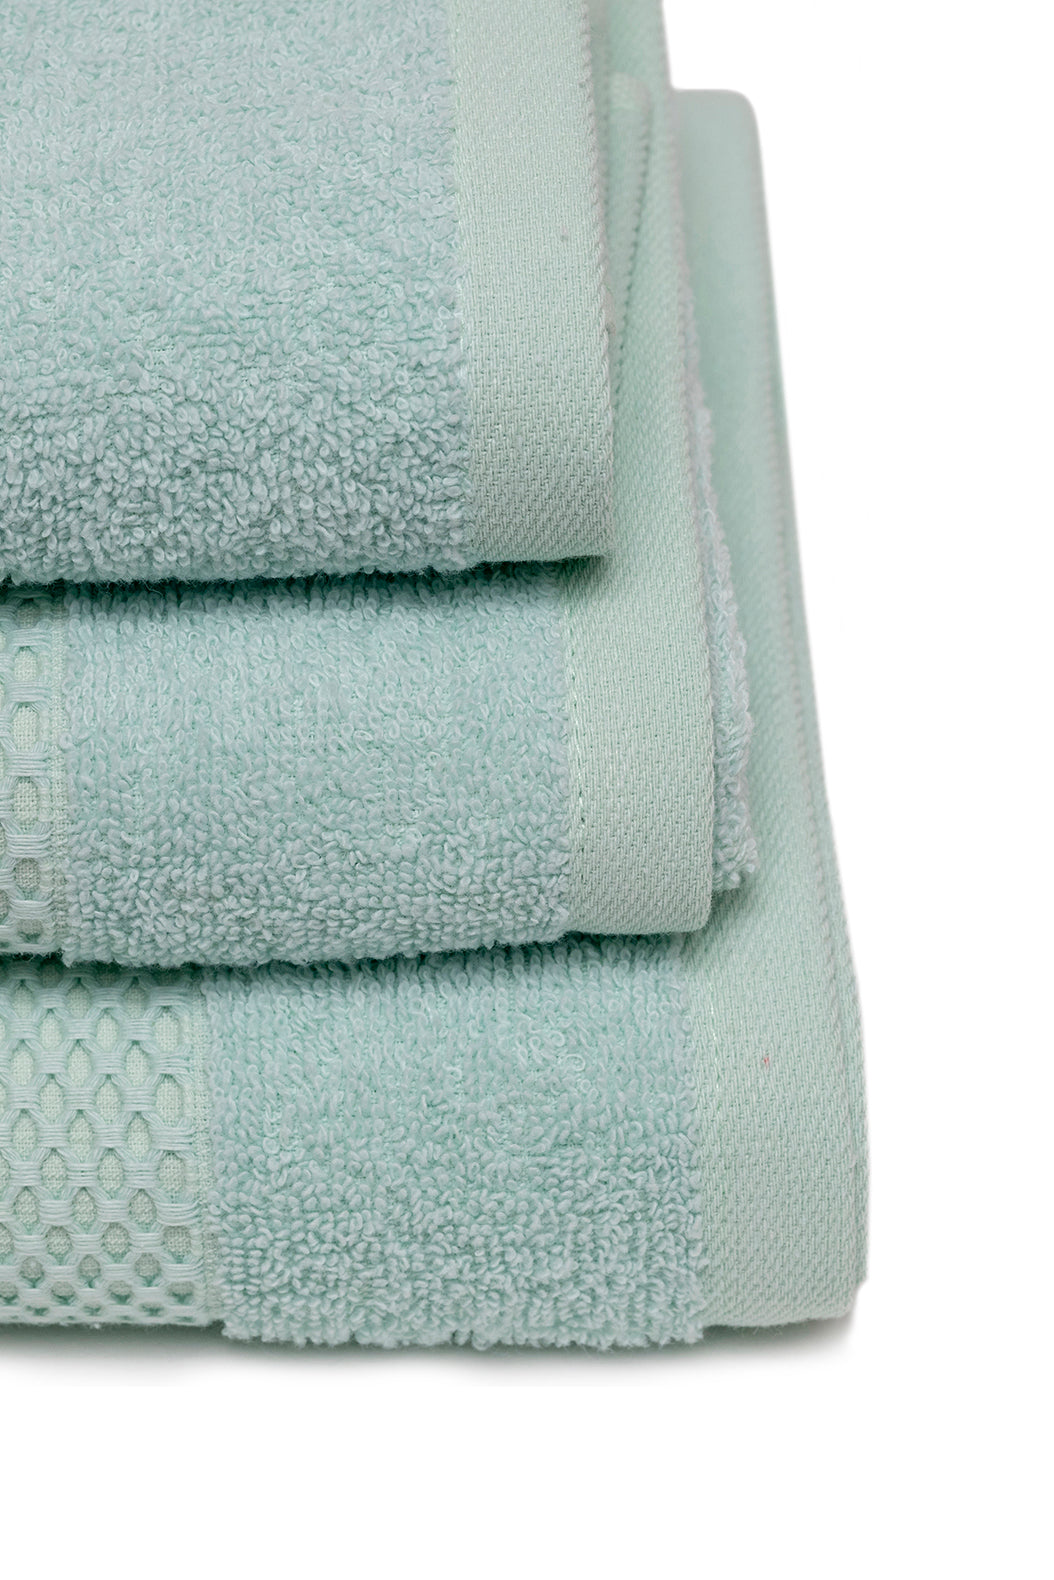 Cozy Towel in Eucaliptus